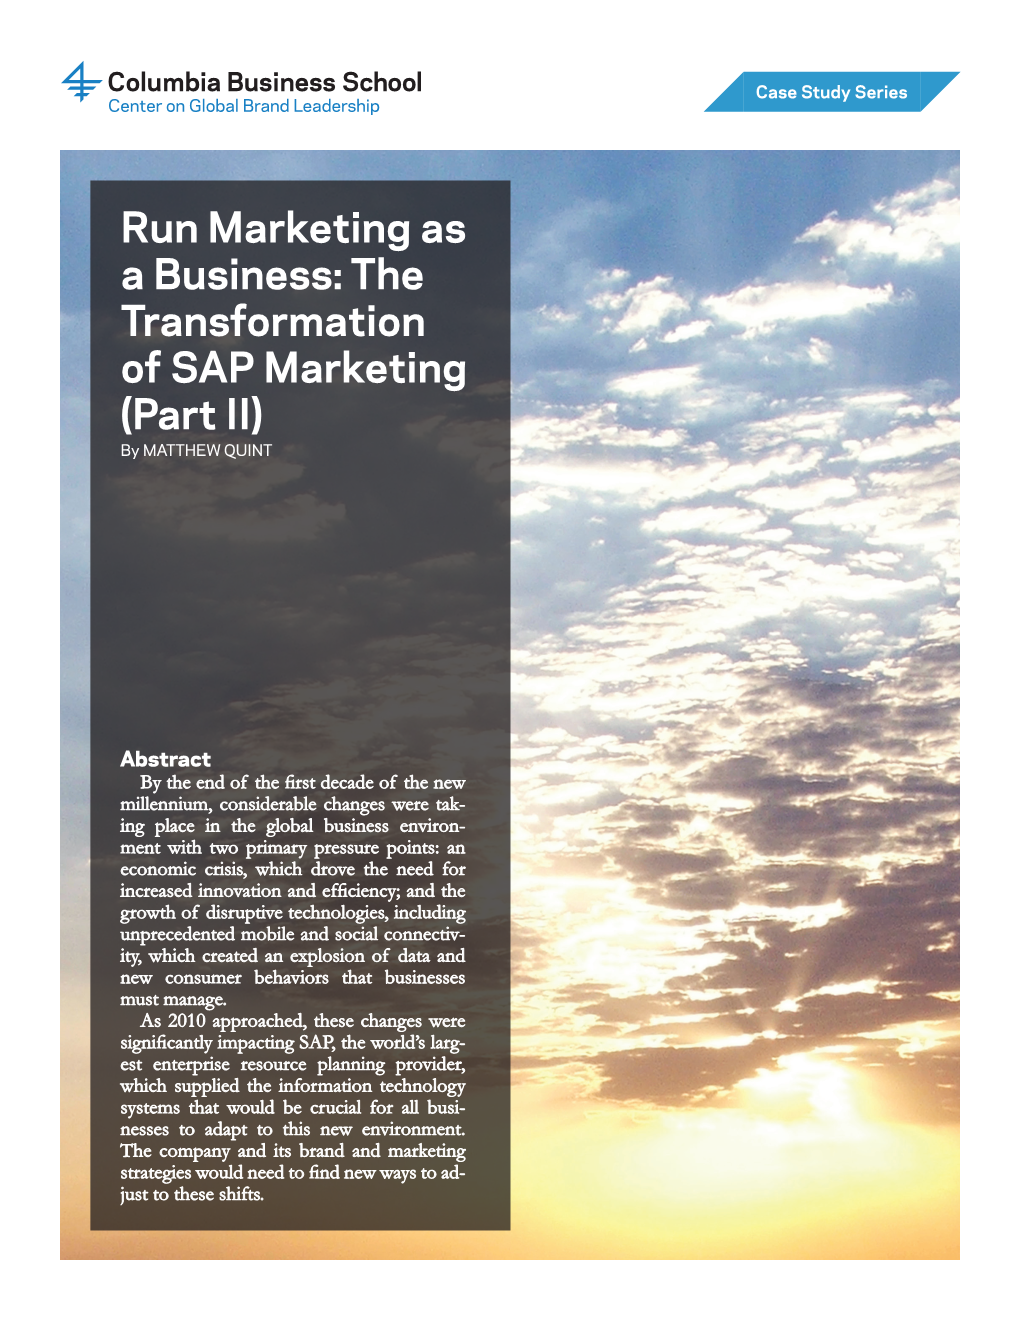 Run Marketing As a Business: the Transformation of SAP Marketing (Part II) by MATTHEW QUINT